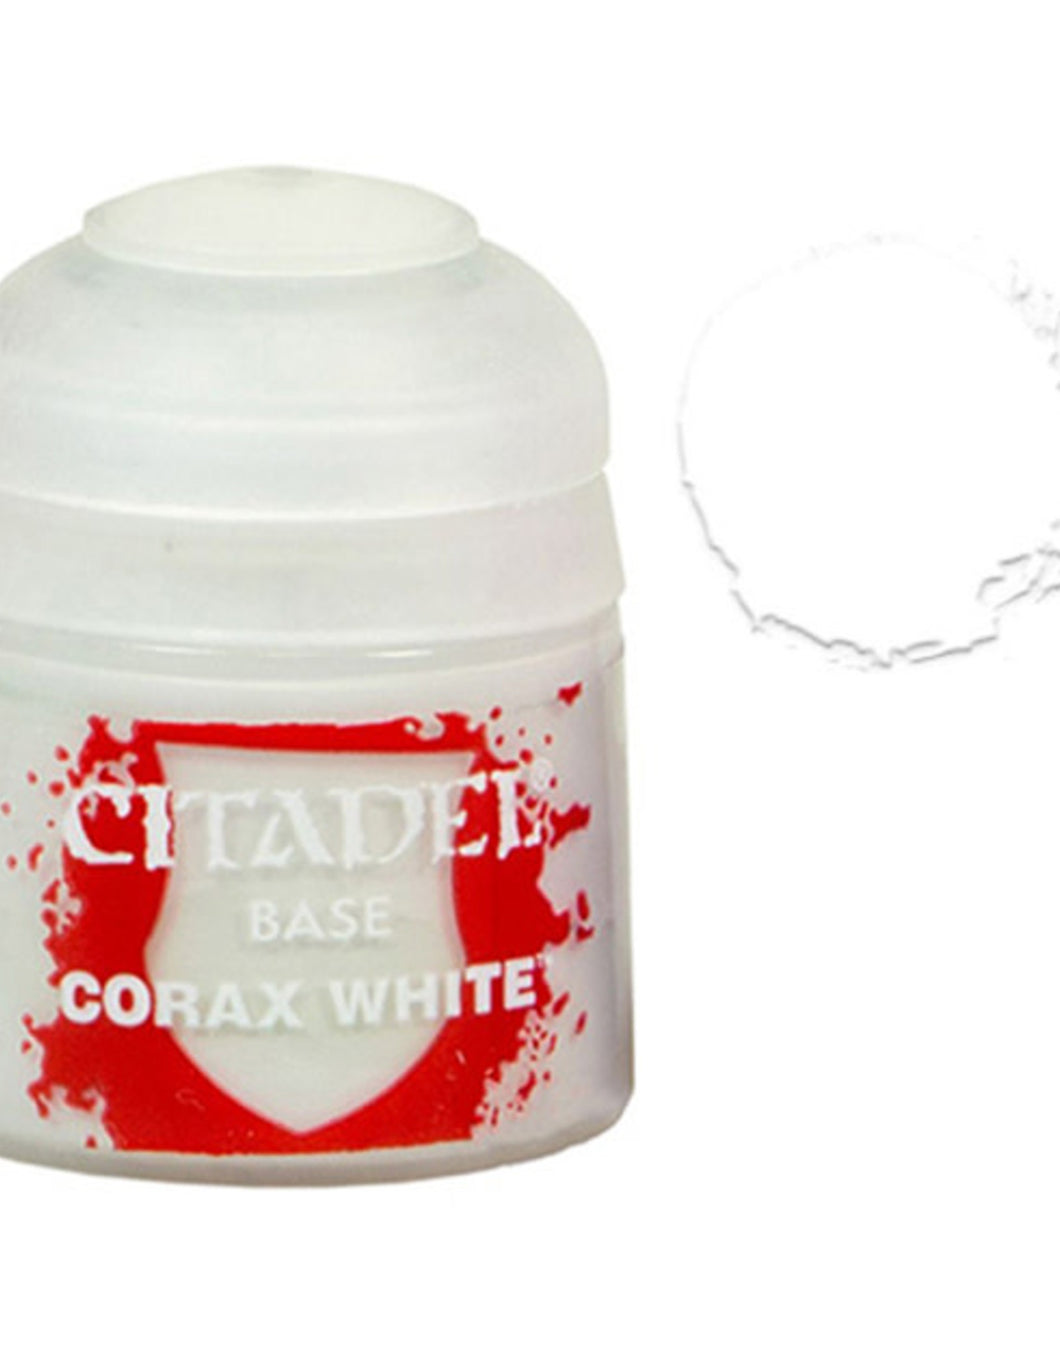 CITADEL BASE COLOR: CORAX WHITE